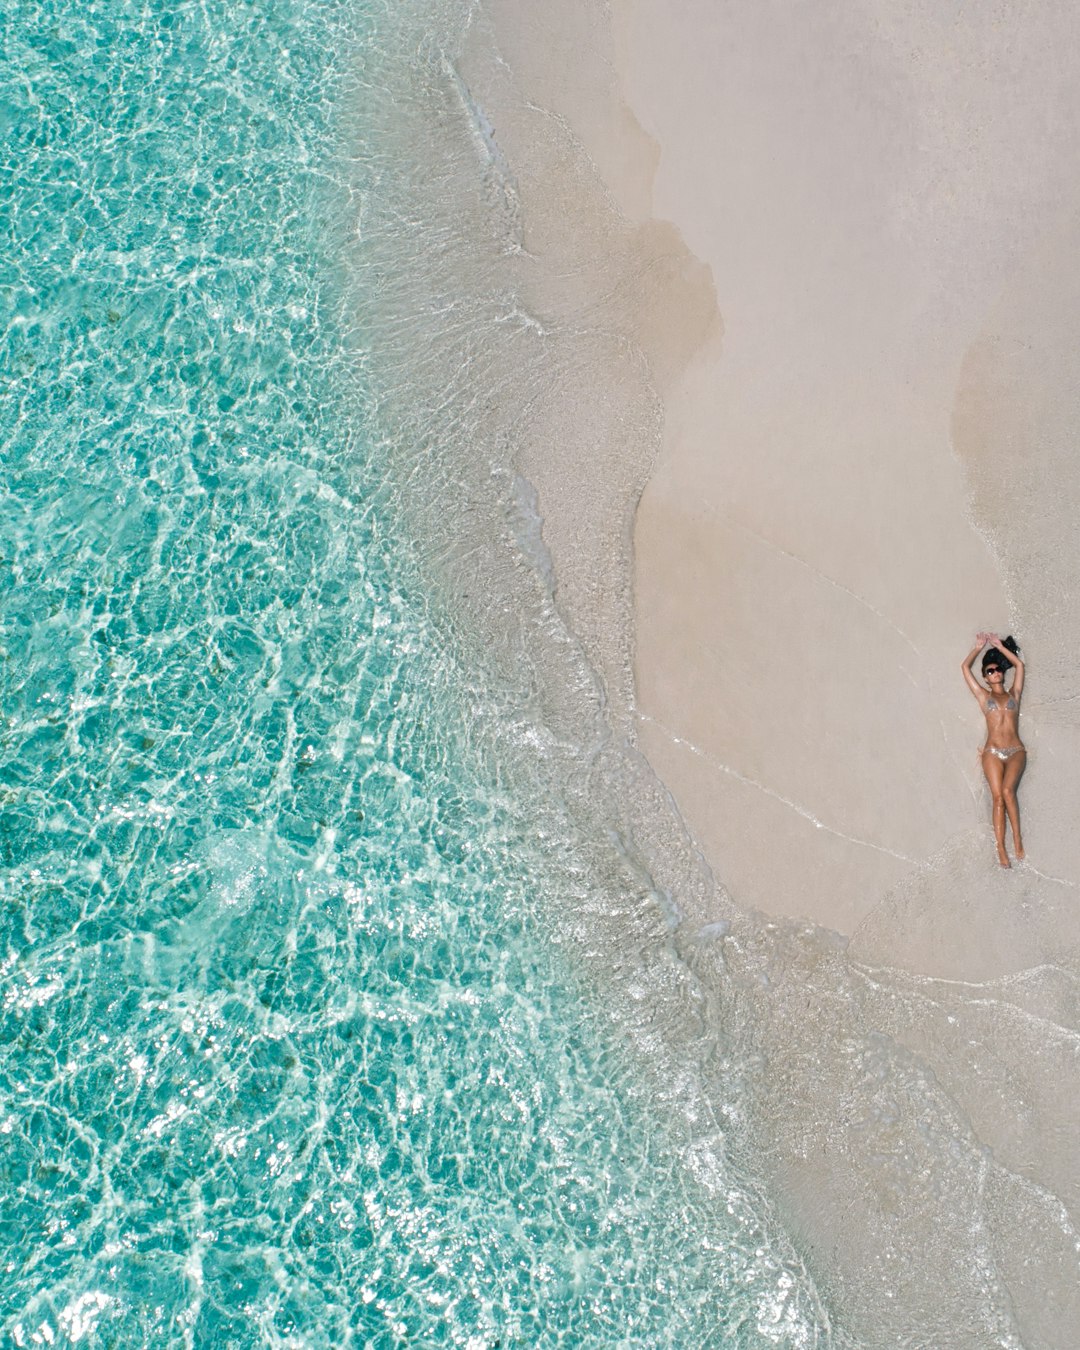 Body of water photo spot Ranveli Island Resort Maldive Islands